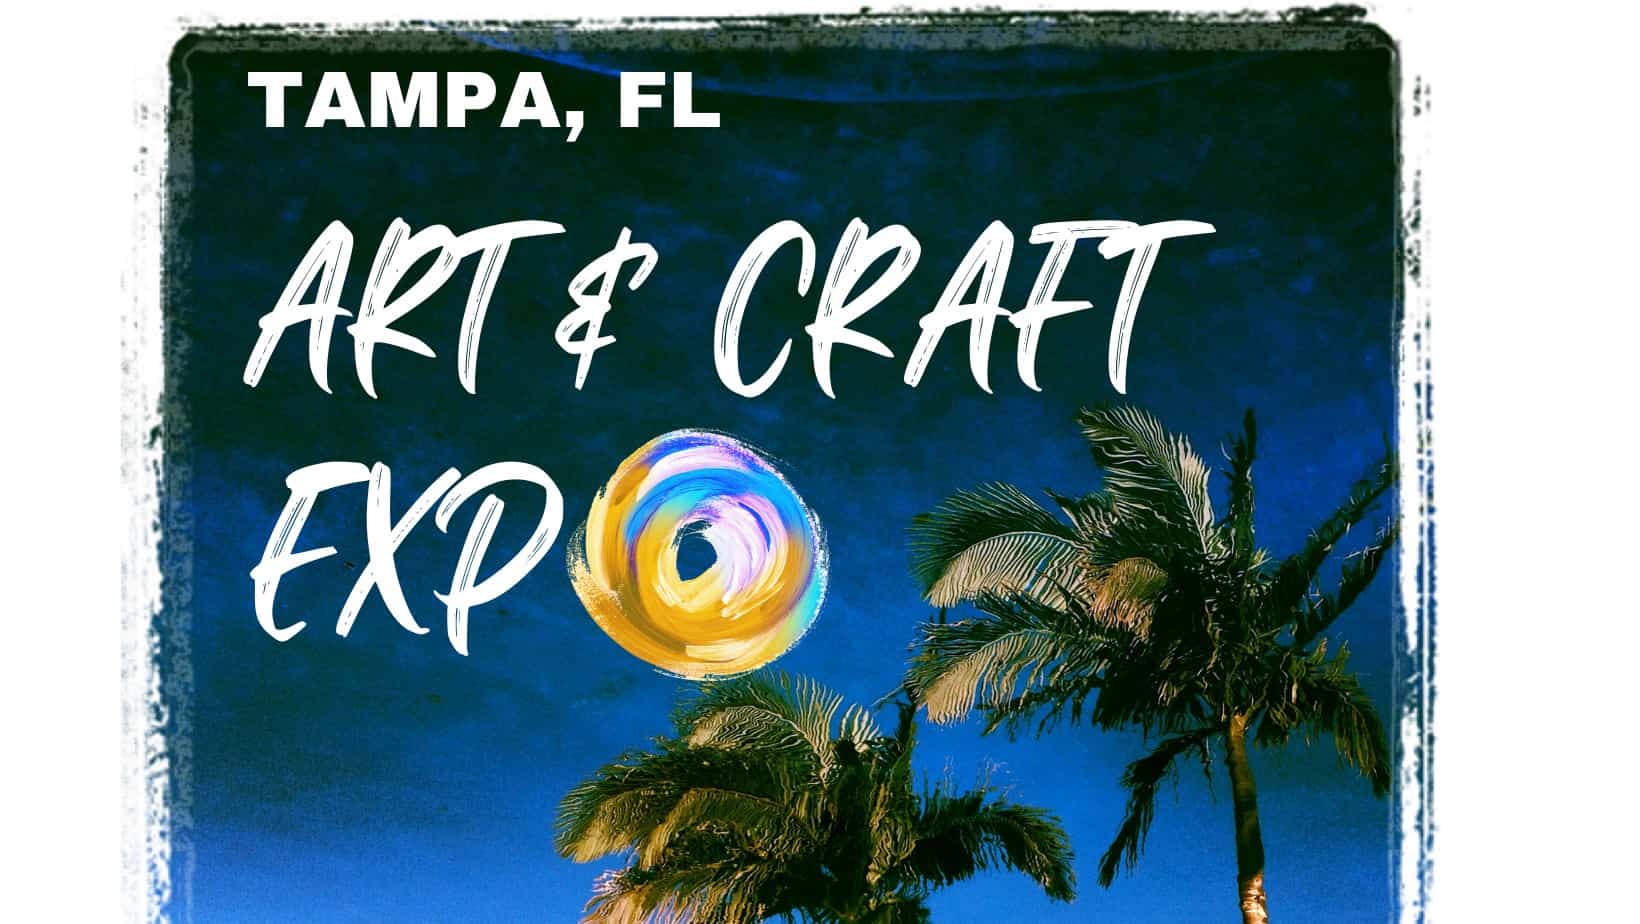 Tampa Holiday Art & Craft Expo December 10 & 11